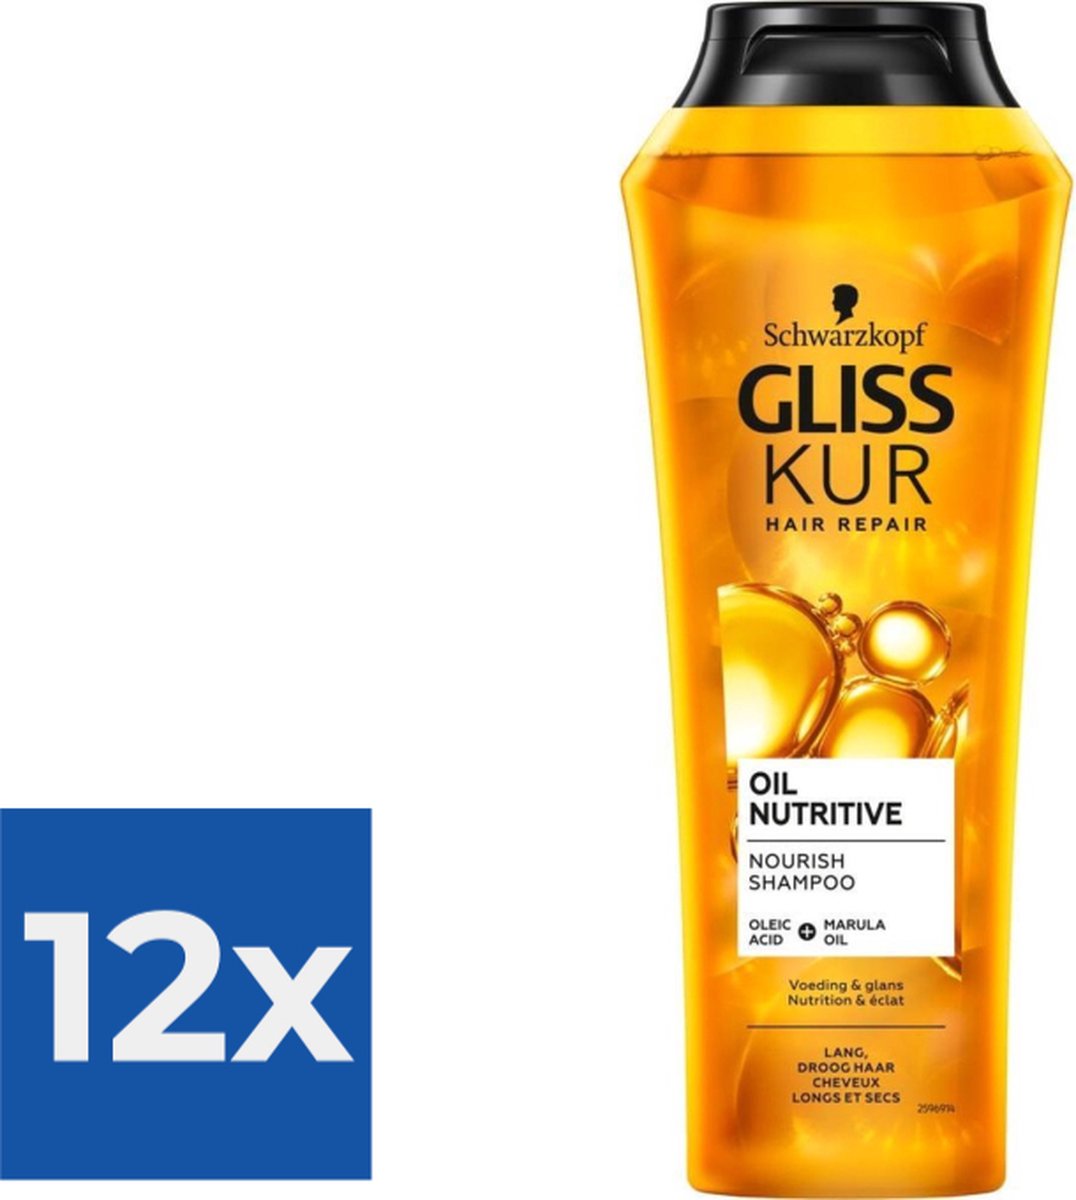 Gliss Kur Shampoo Oil Nutritive 250 ml - Voordeelverpakking 12 stuks